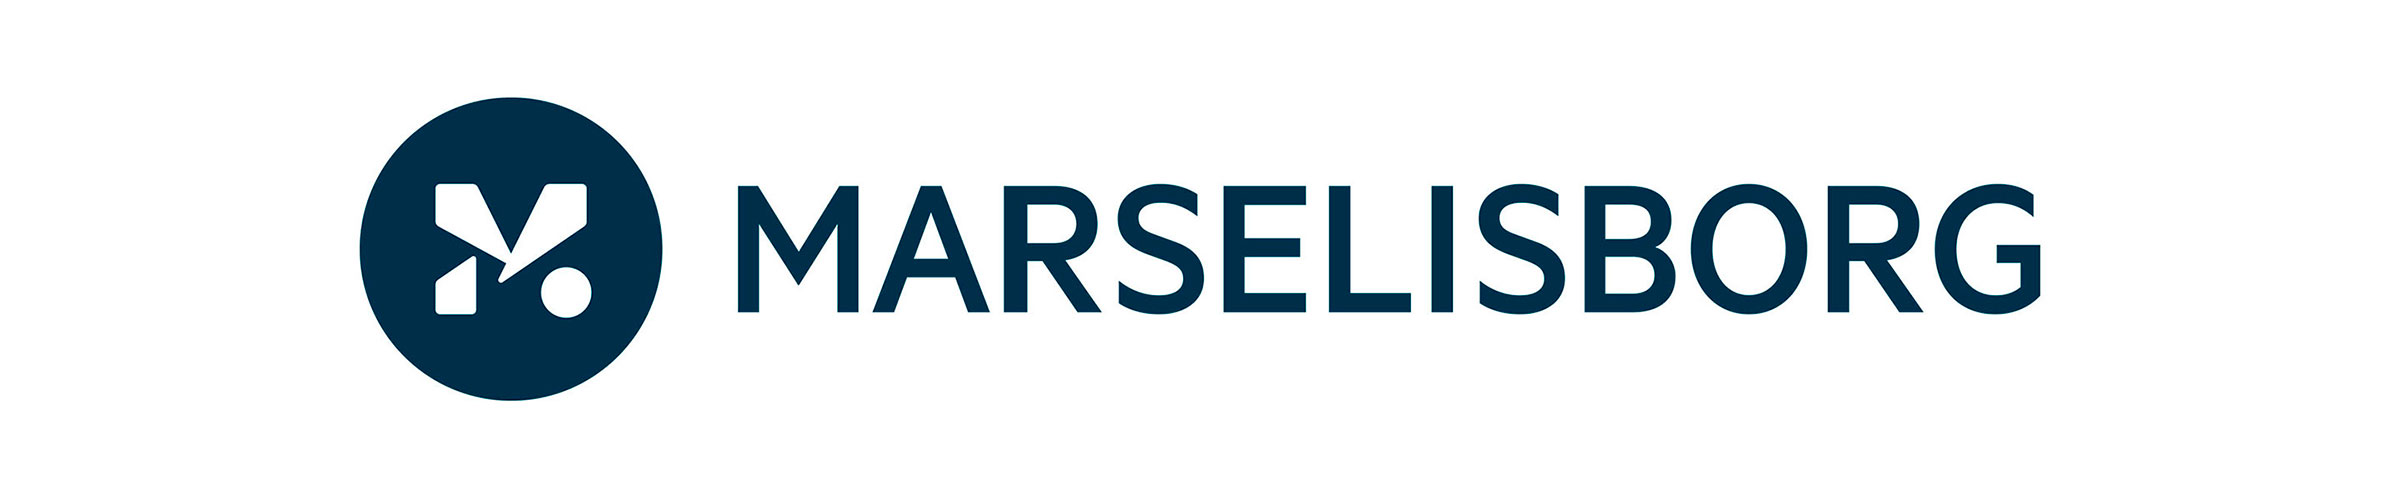 Logo: Marselisborg